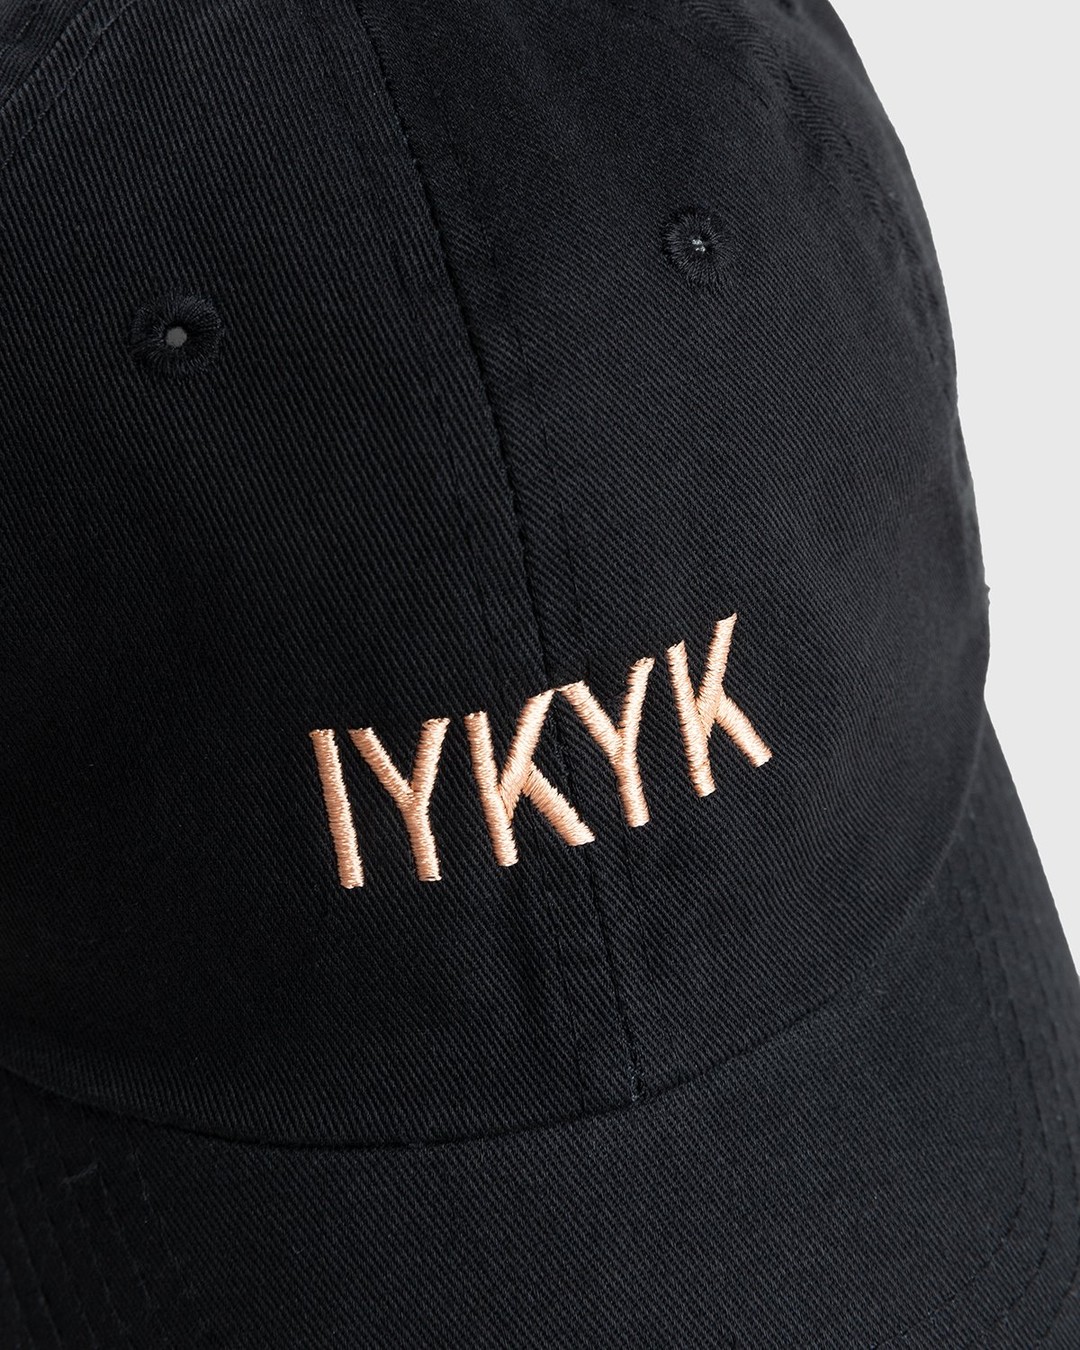 HO HO COCO – IYKYK Cap Black - Hats - Black - Image 5